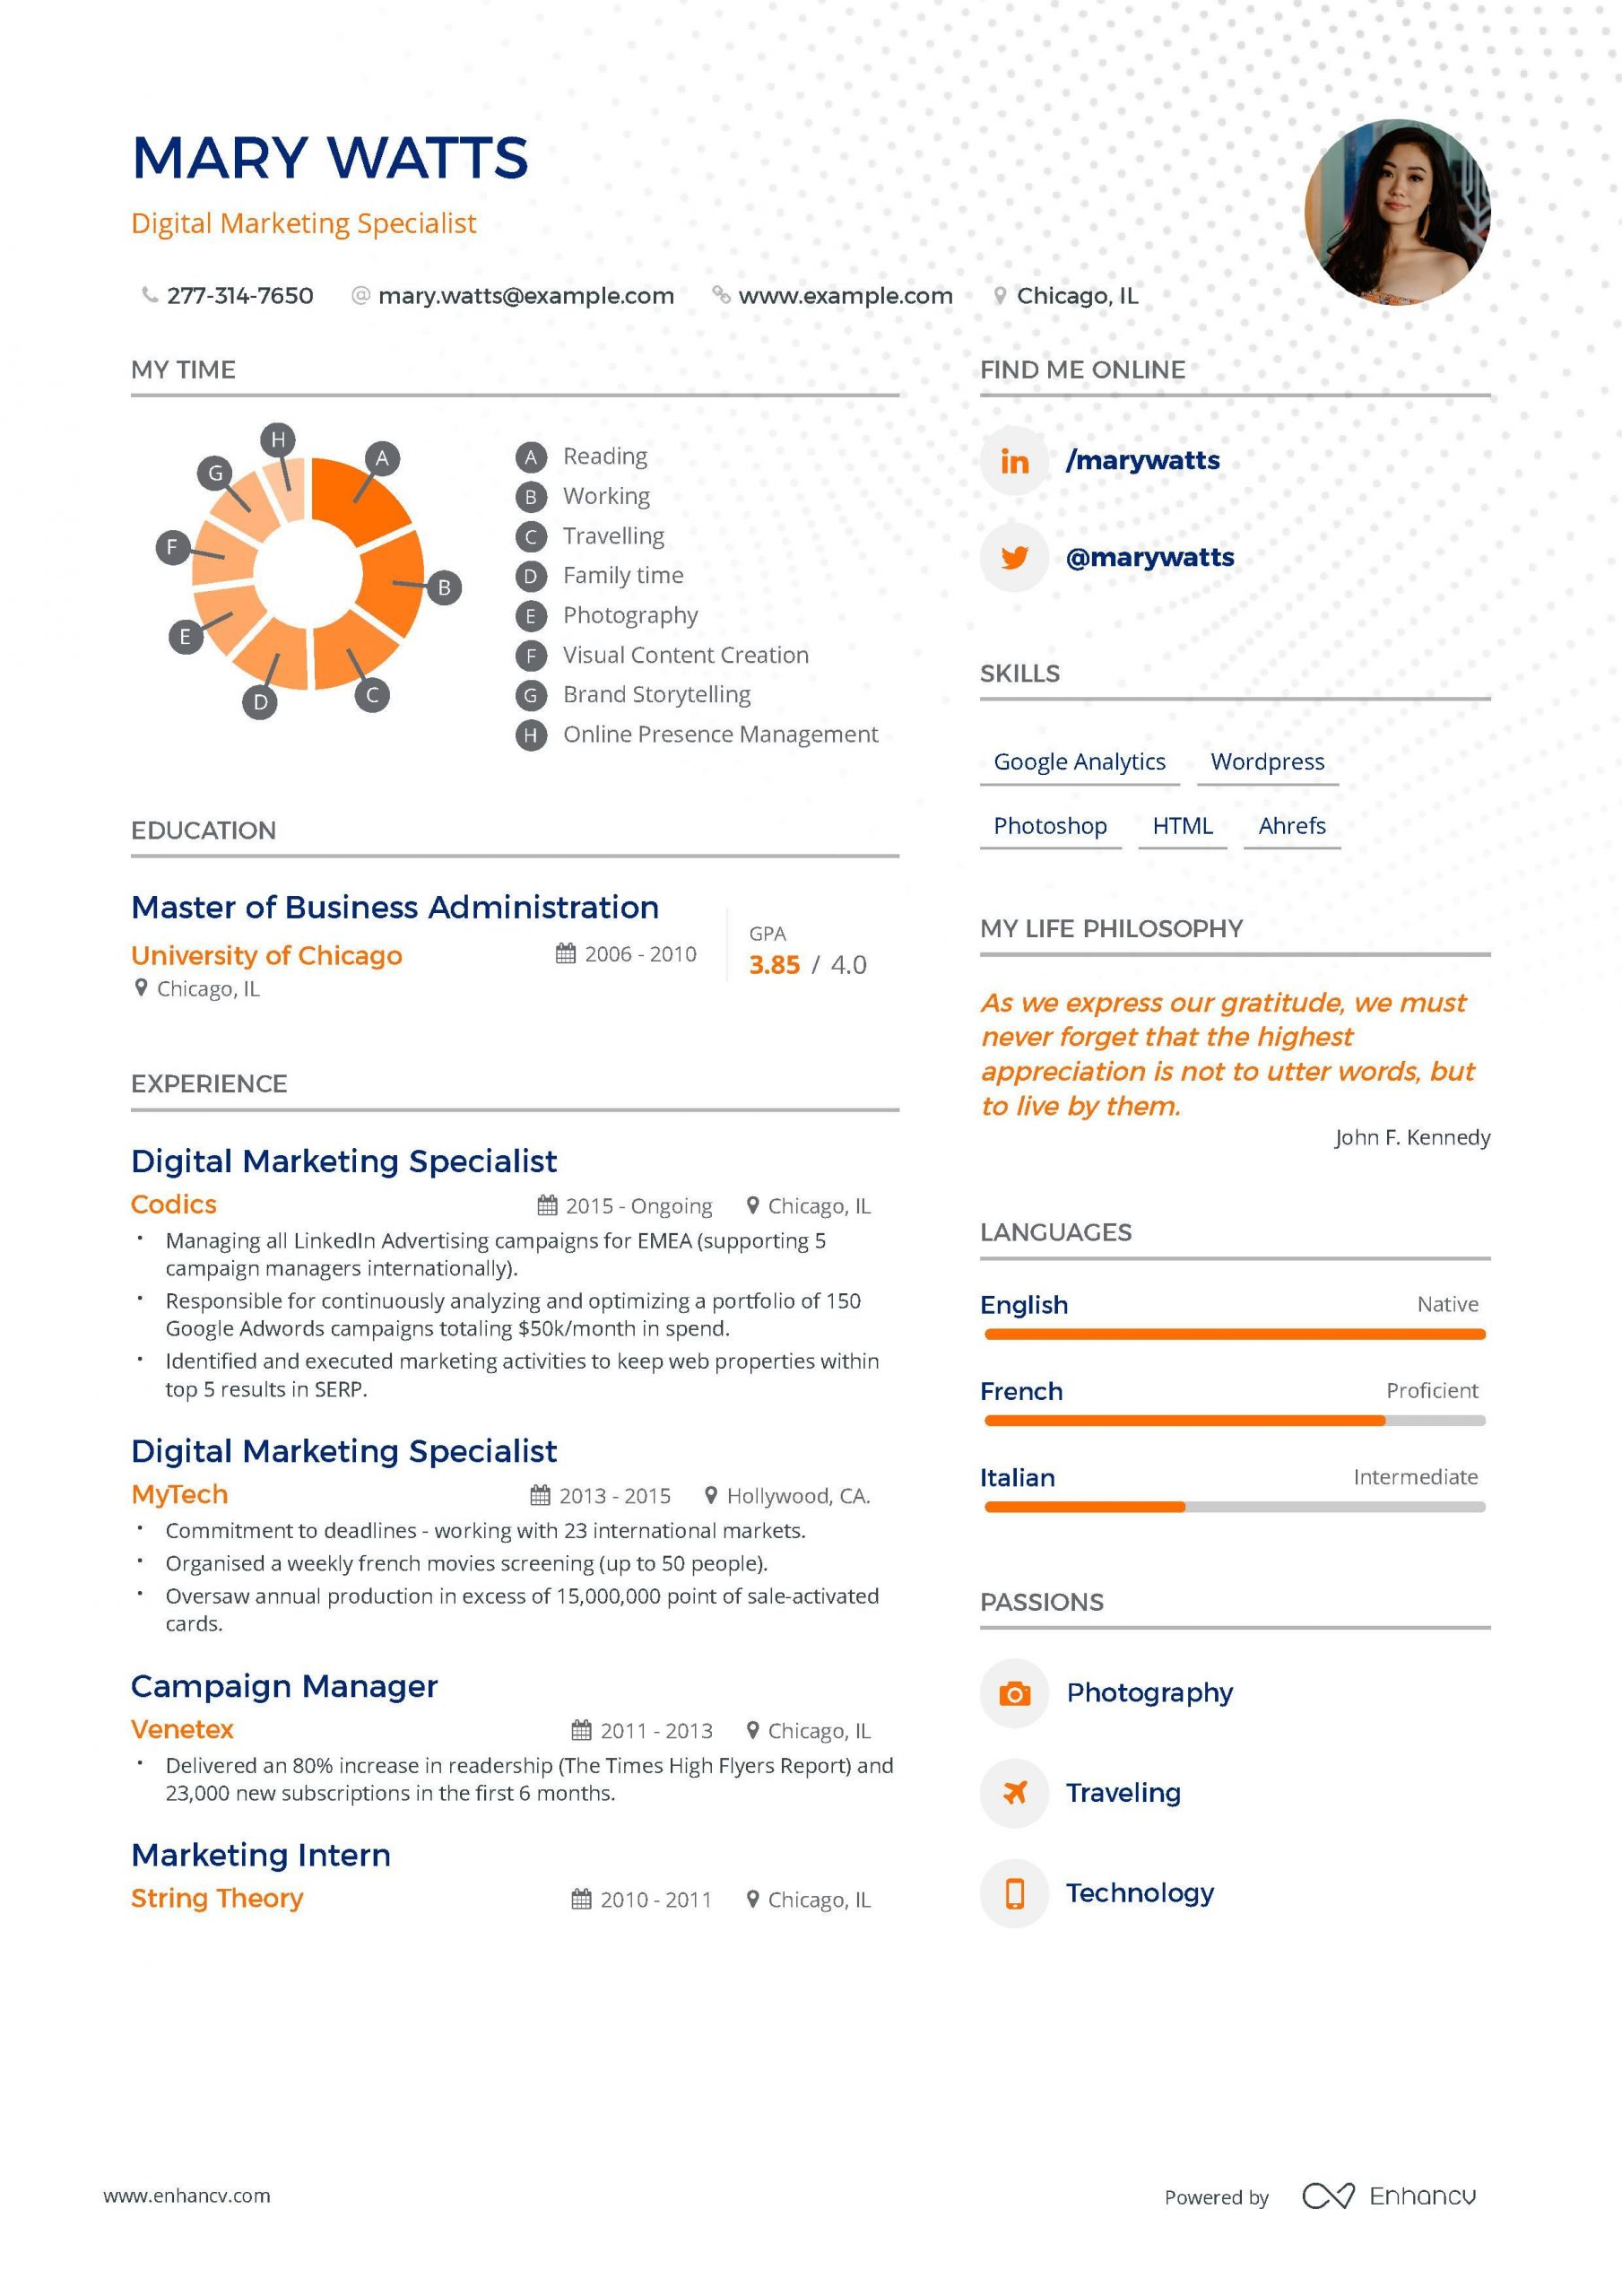 Digital Marketing Resume Sample for Experienced Digital Marketing Resume Example and Guide for 2019 Marketing …